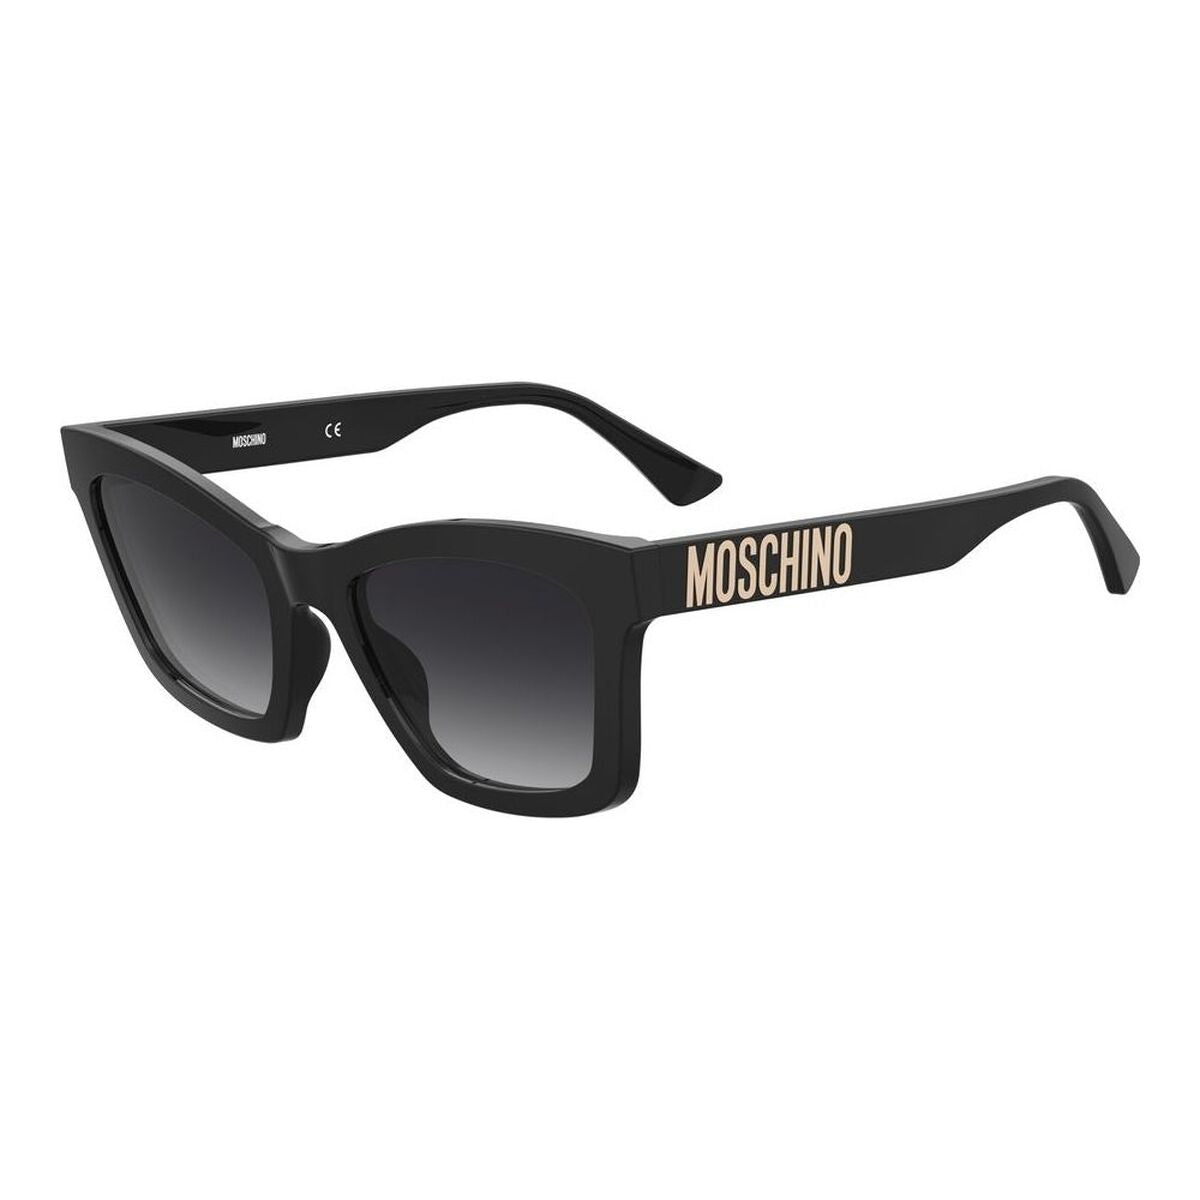 Kaufe Damensonnenbrille Moschino MOS156_S bei AWK Flagship um € 208.00